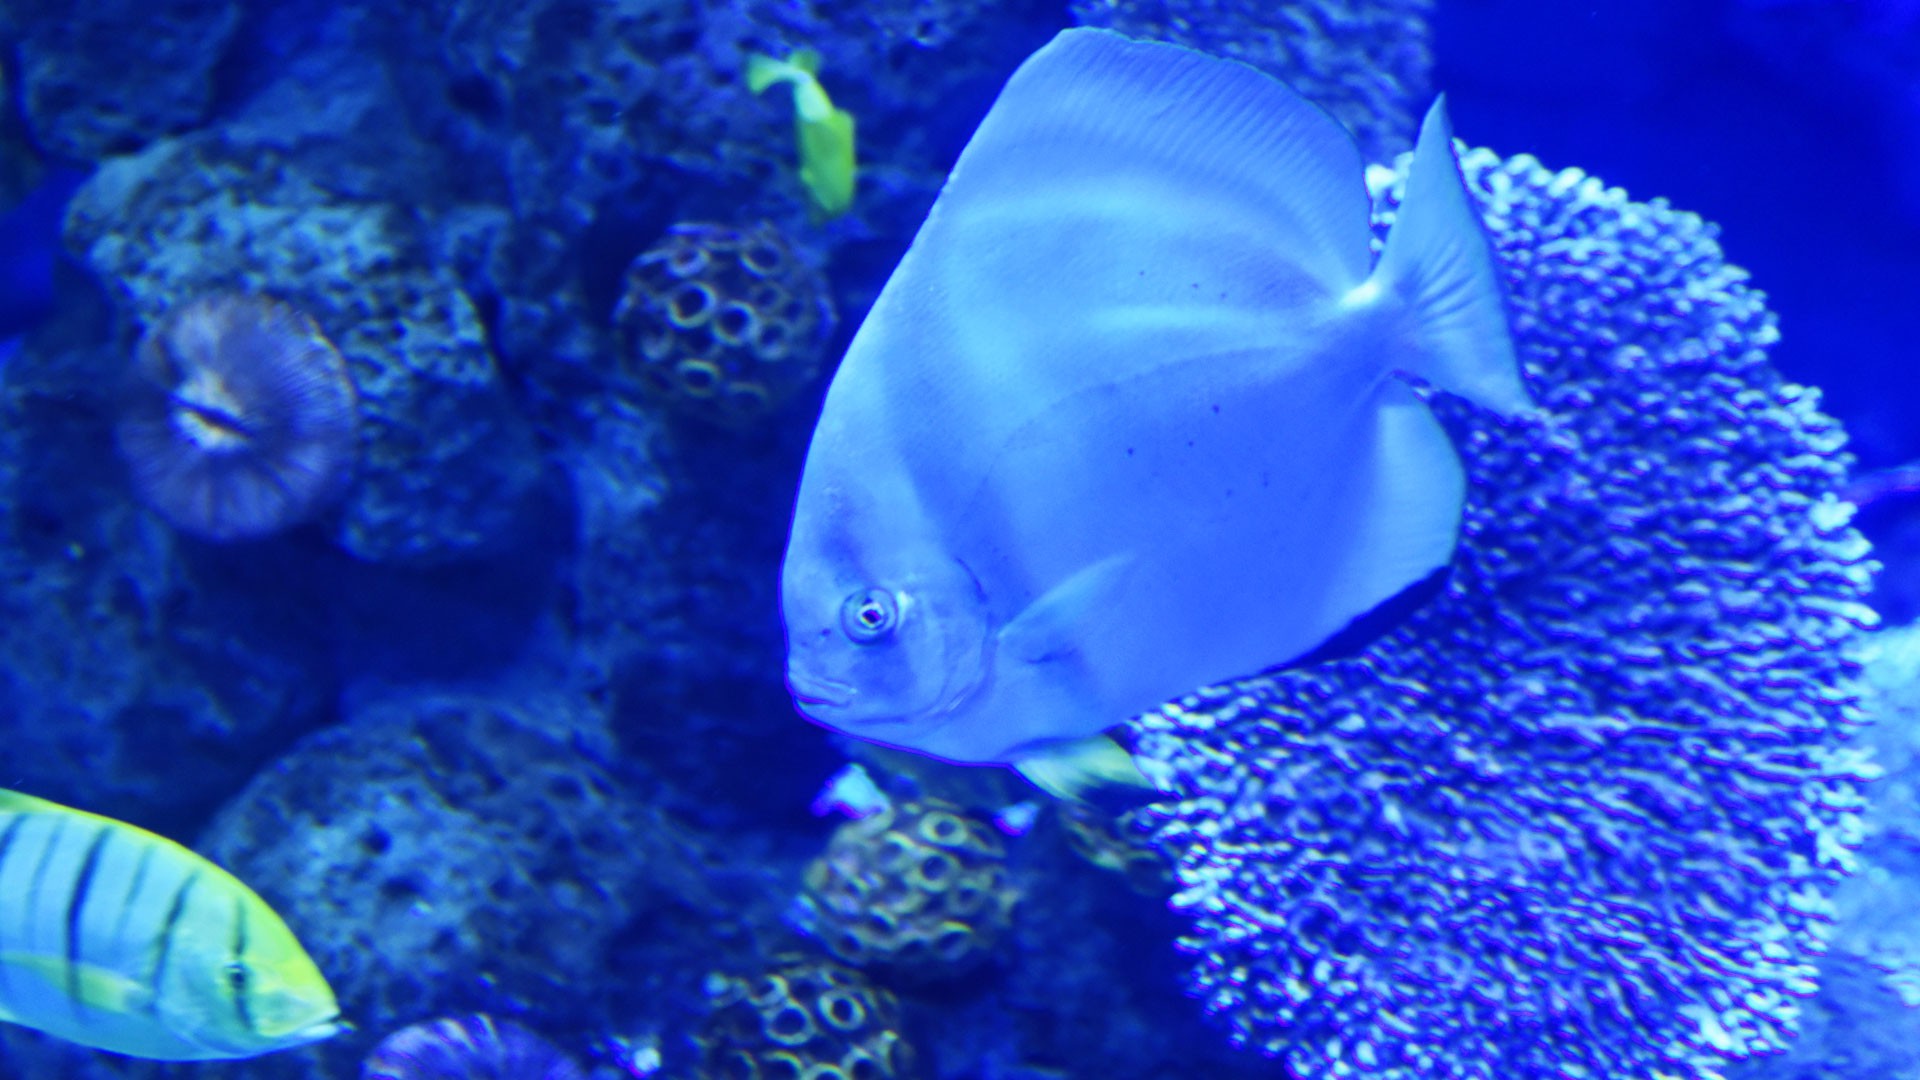 Vlamigni Surgeonfish